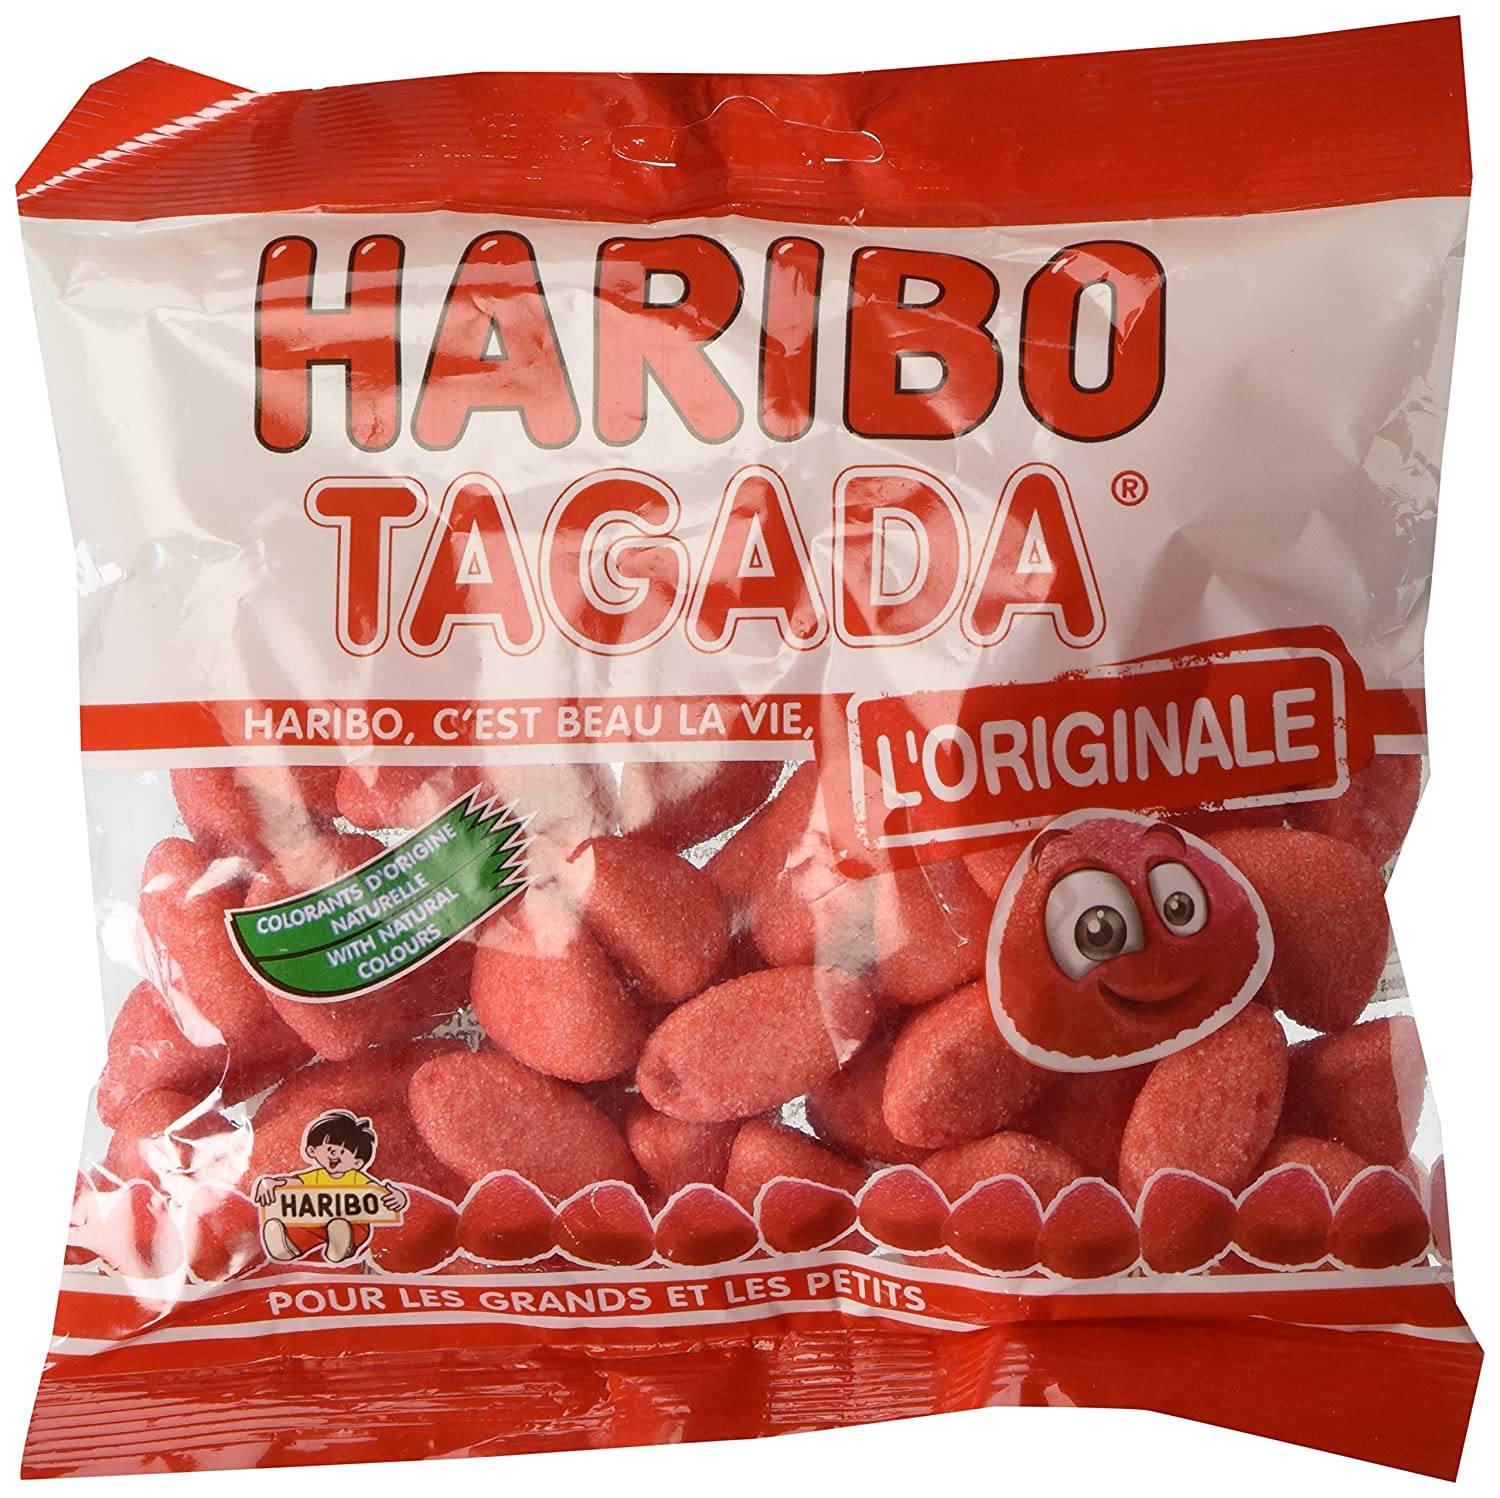 French Tagada Strawberry Haribo Candy - image 1 of 2